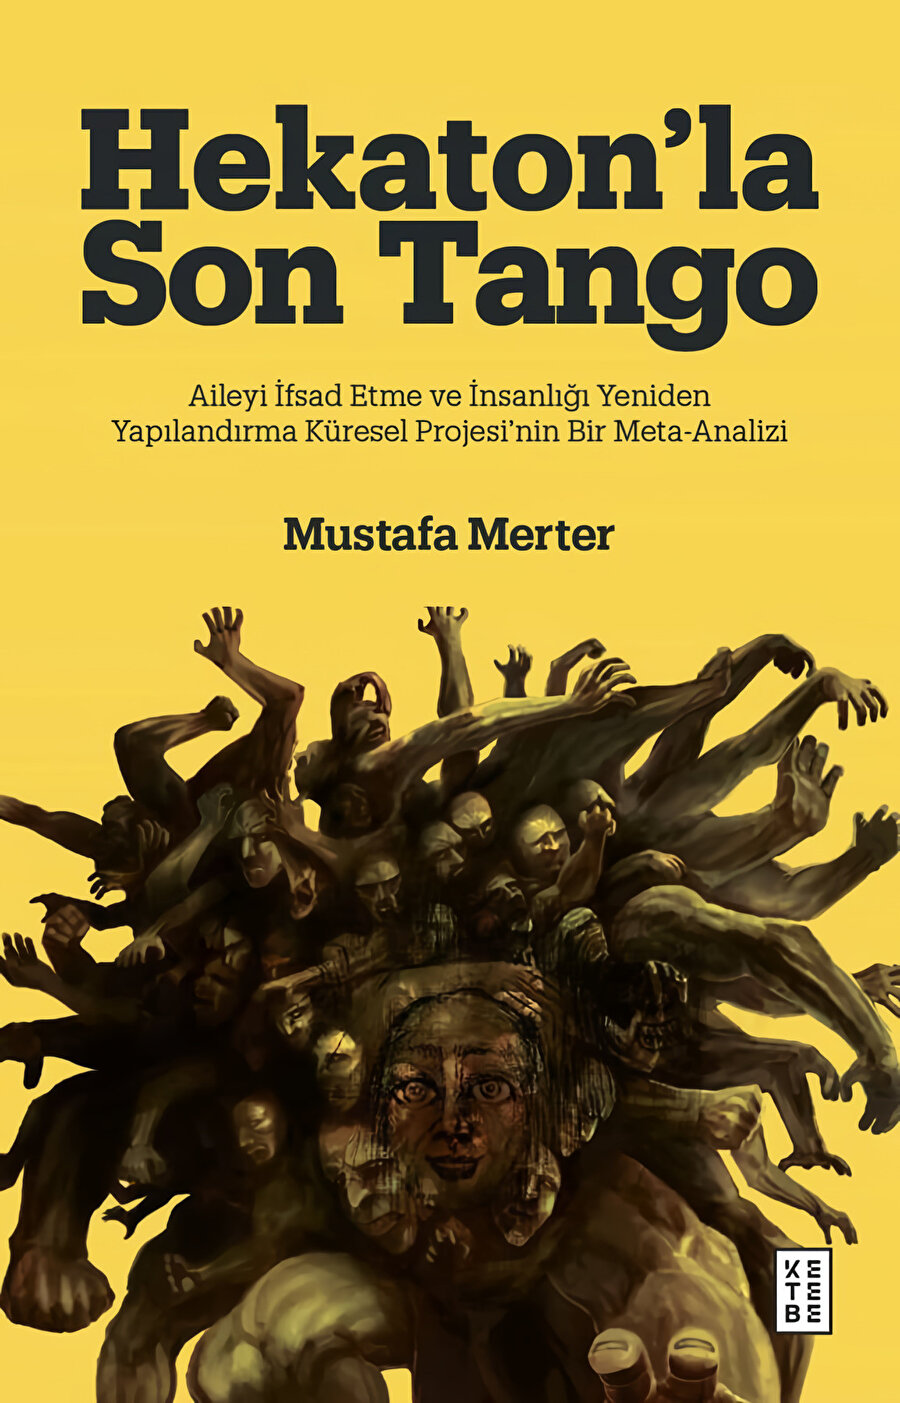 Hekaton'la Son Tango - Mustafa Merter.